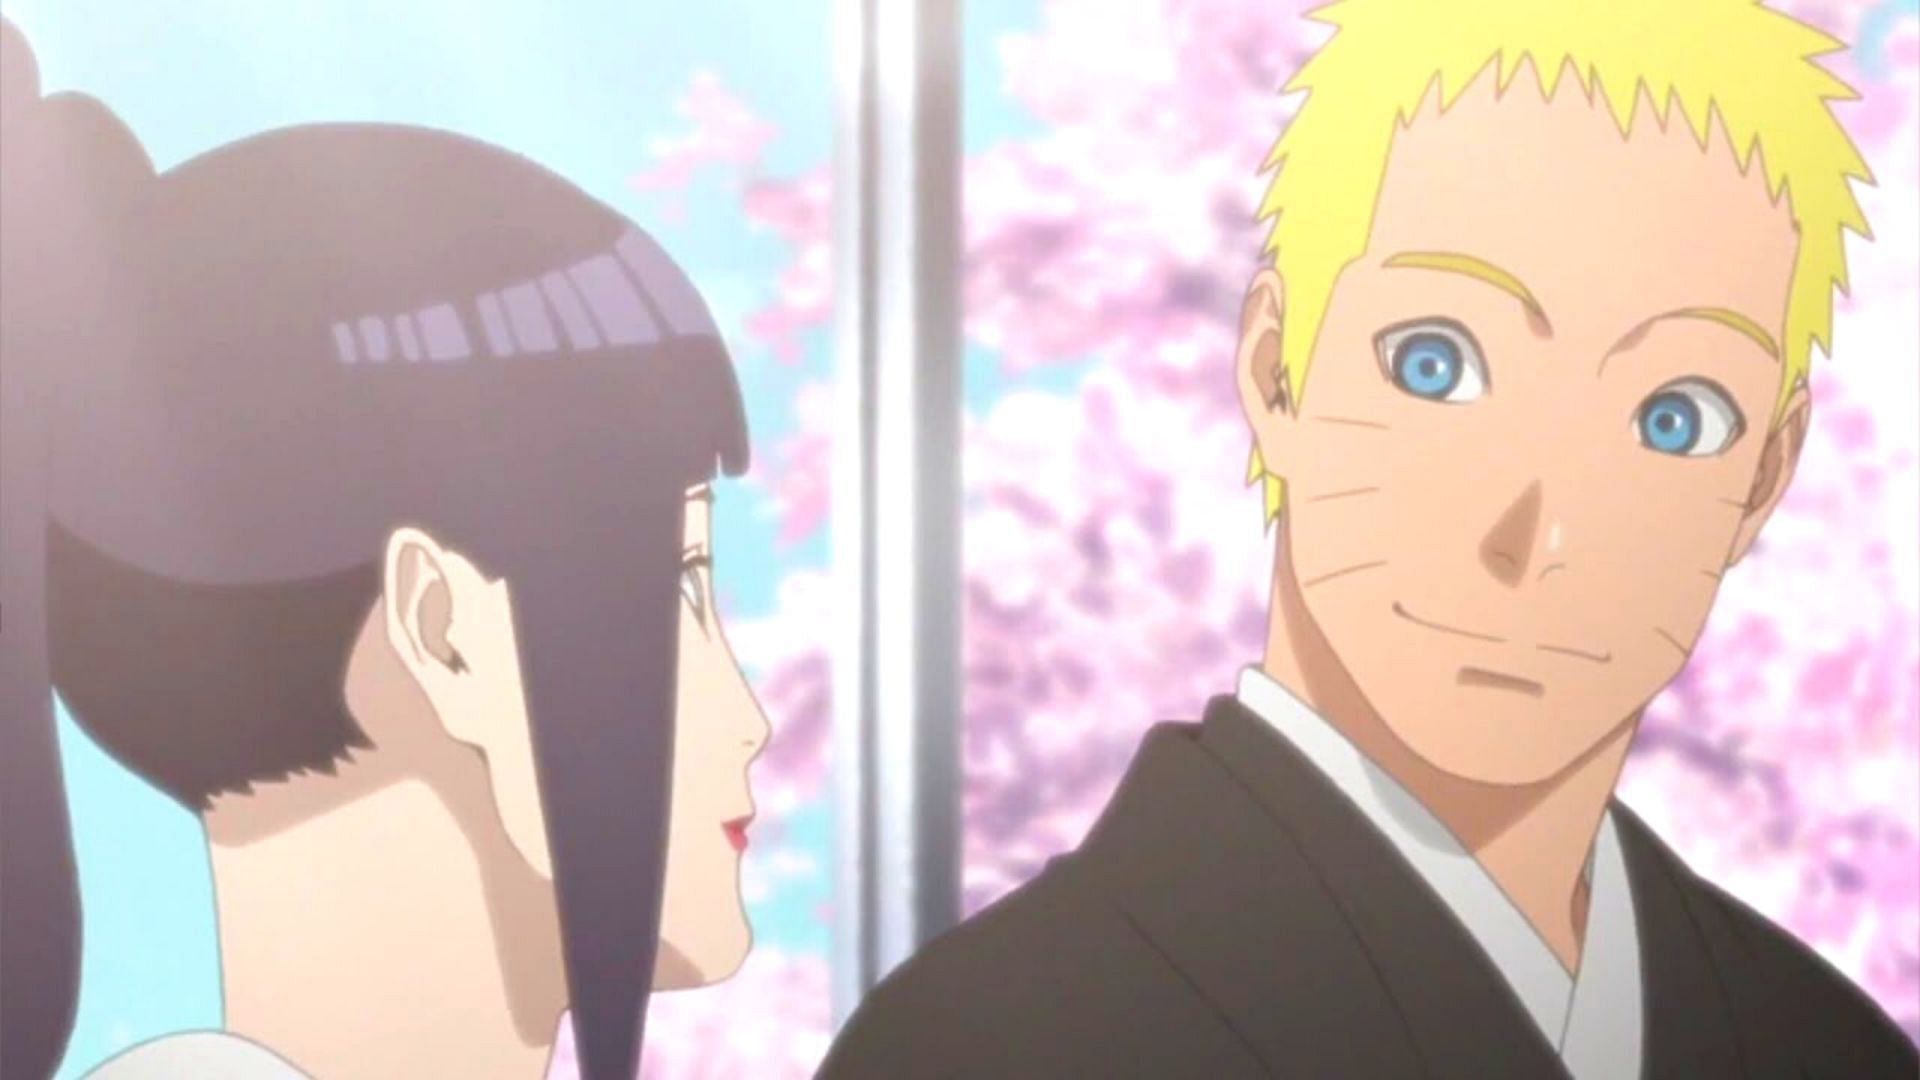 Naruto and Hinata as seen in the anime (Image via Studio Pierrot)